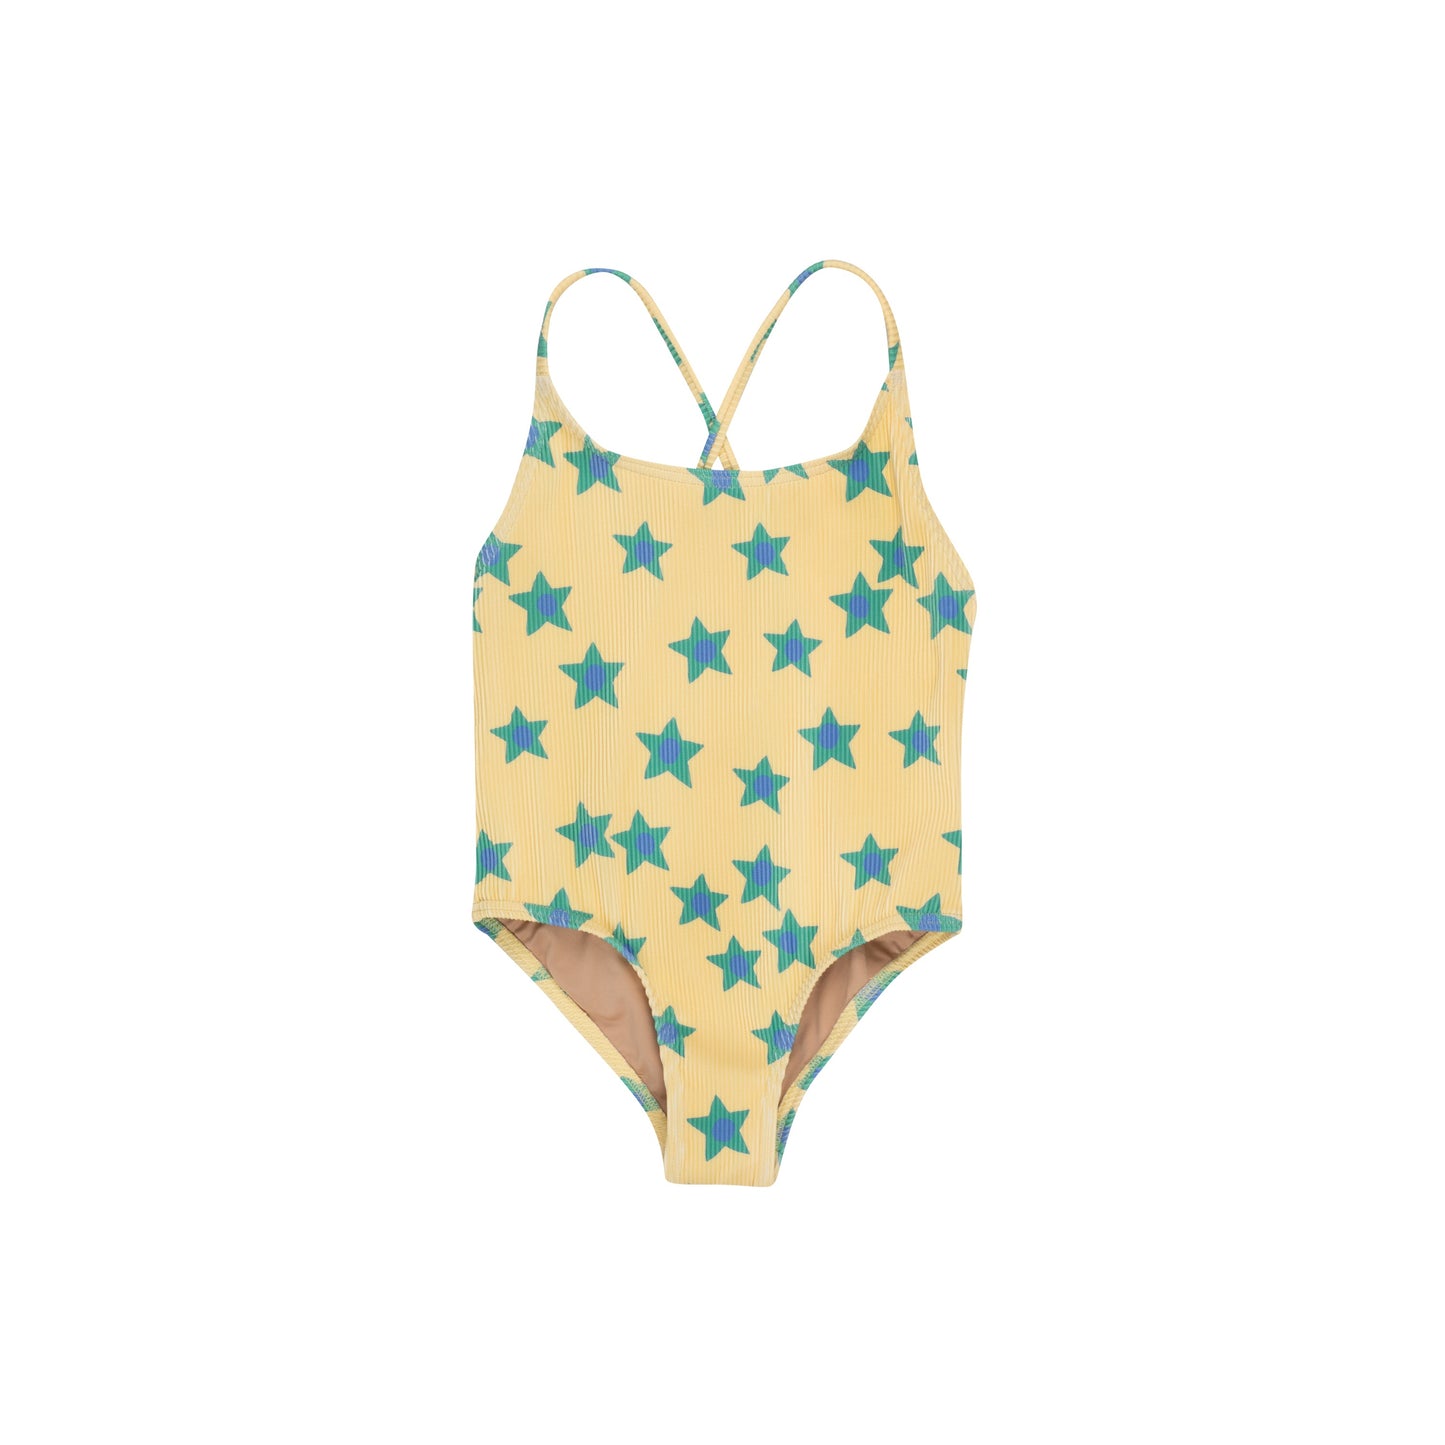 TINYCOTTONS Starflowers Swimsuit ALWAYS SHOW